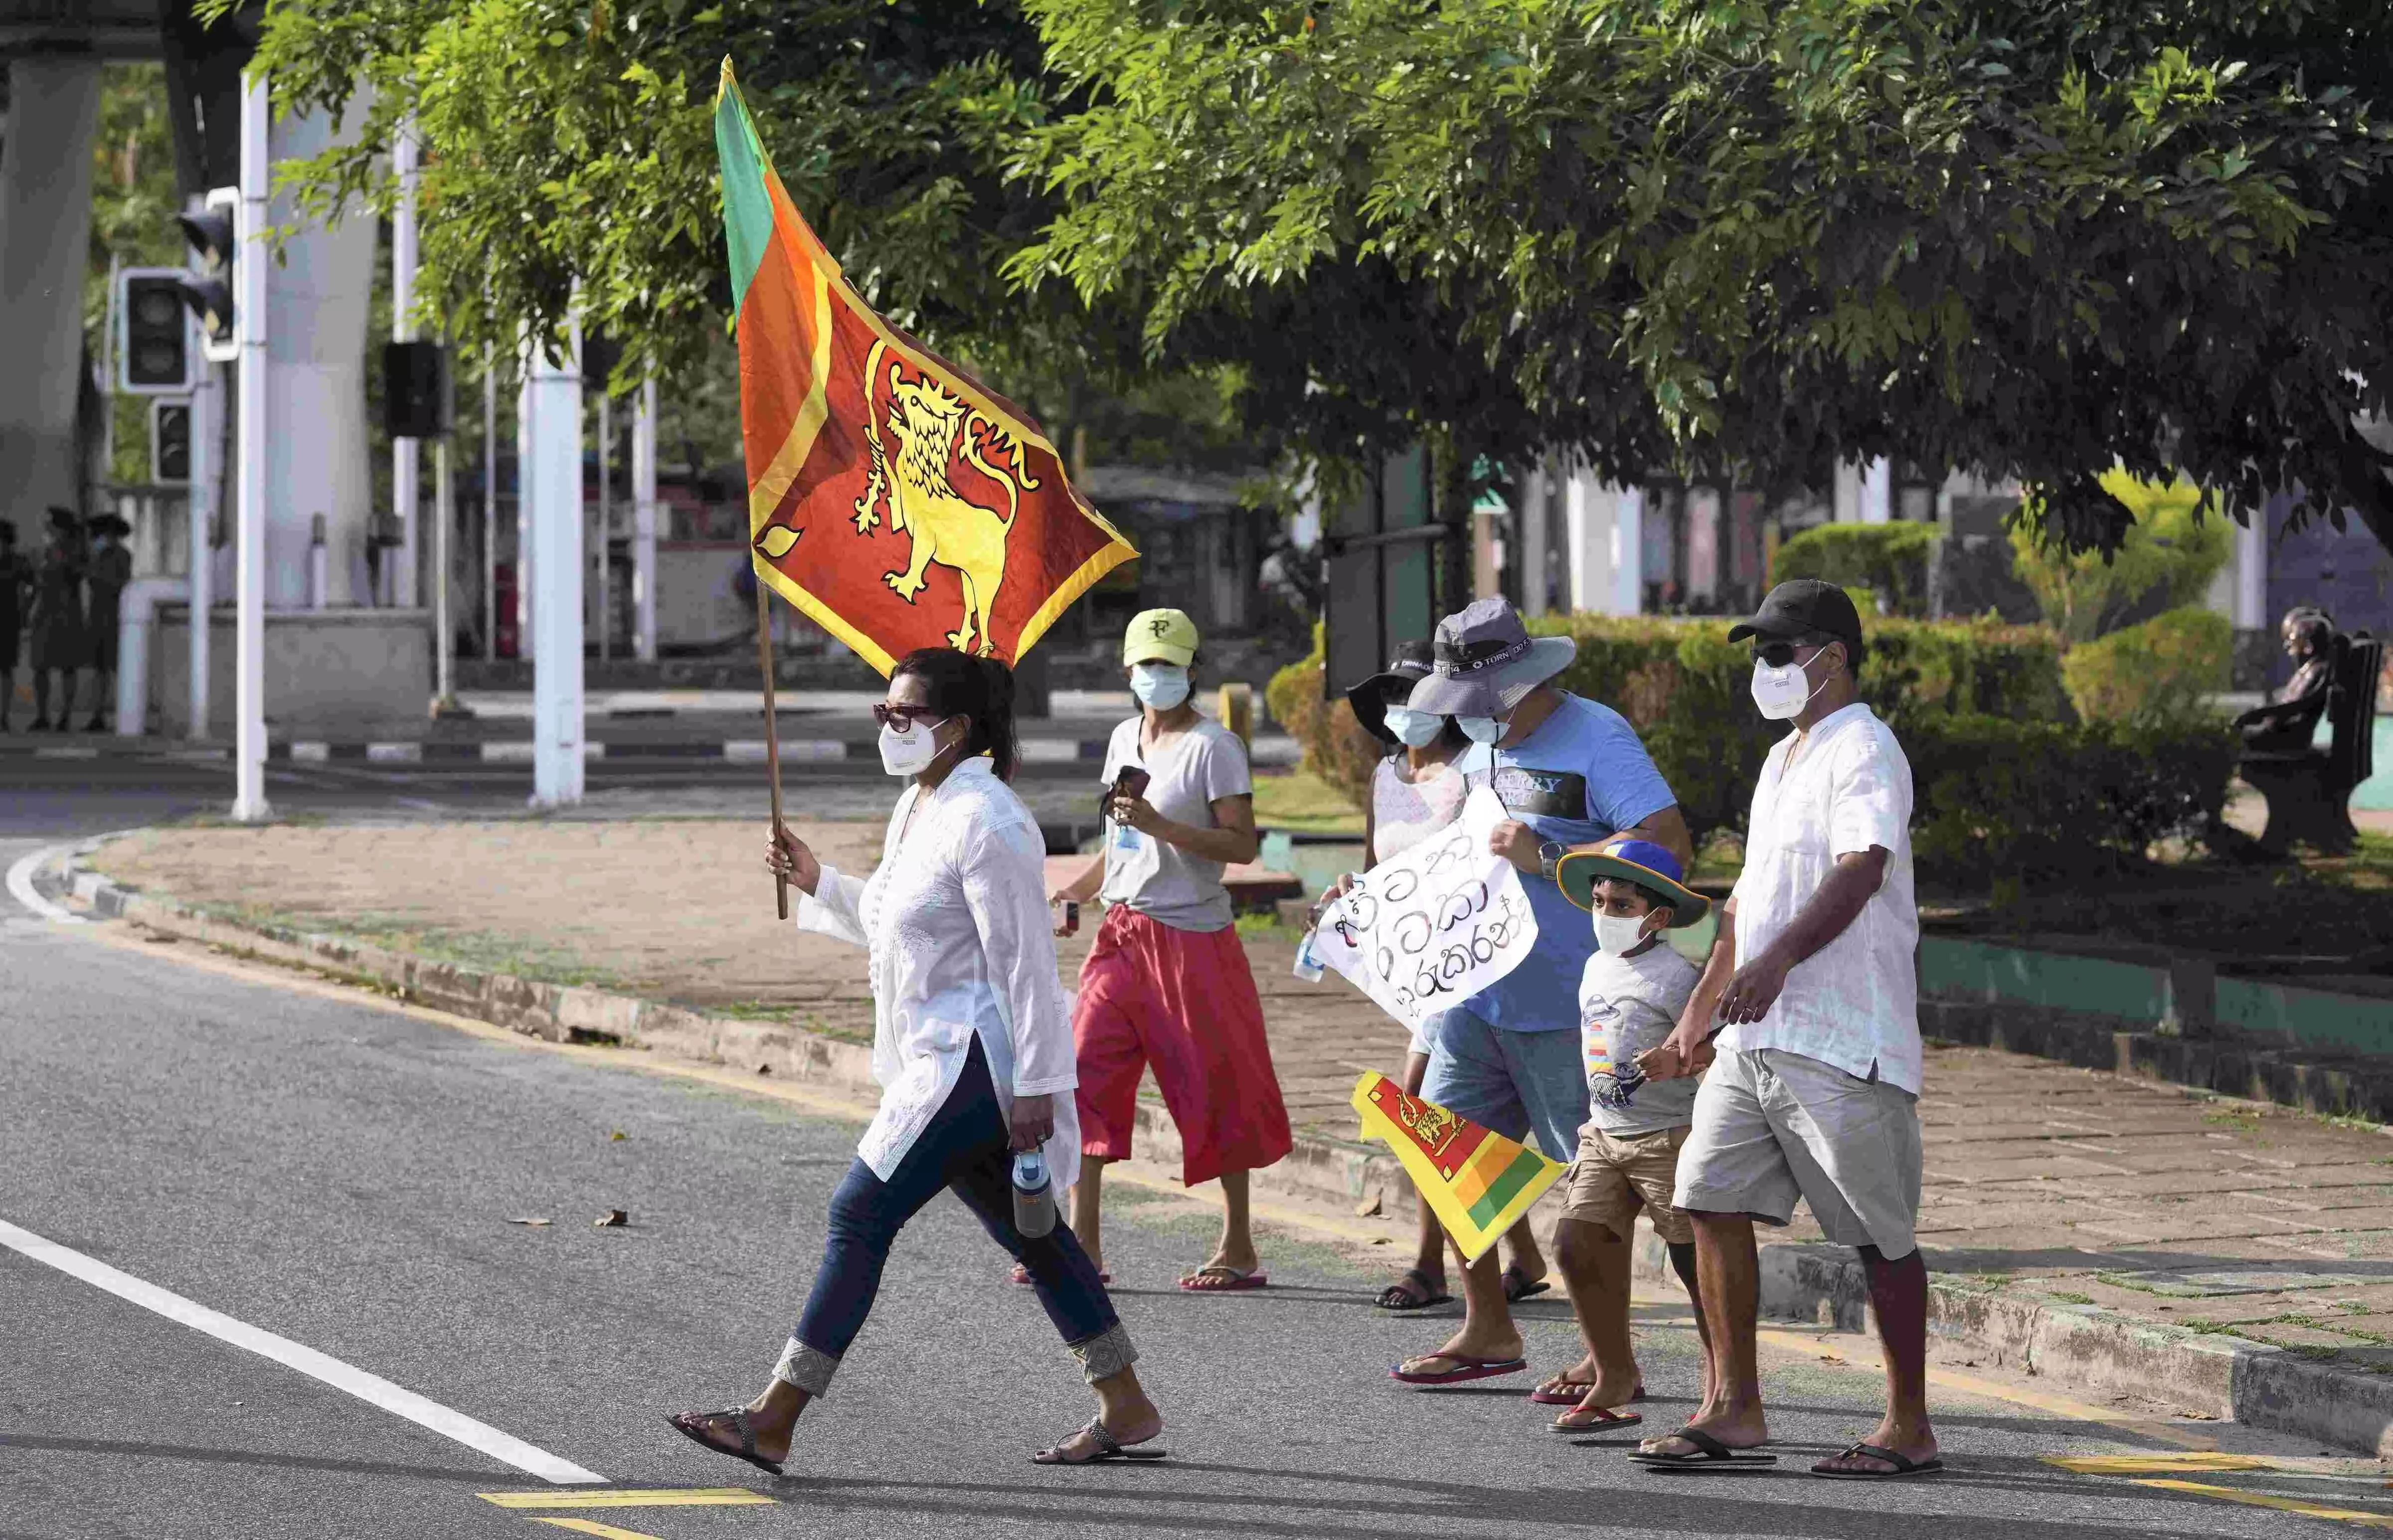 Sri Lanka police investigates threats on election commission